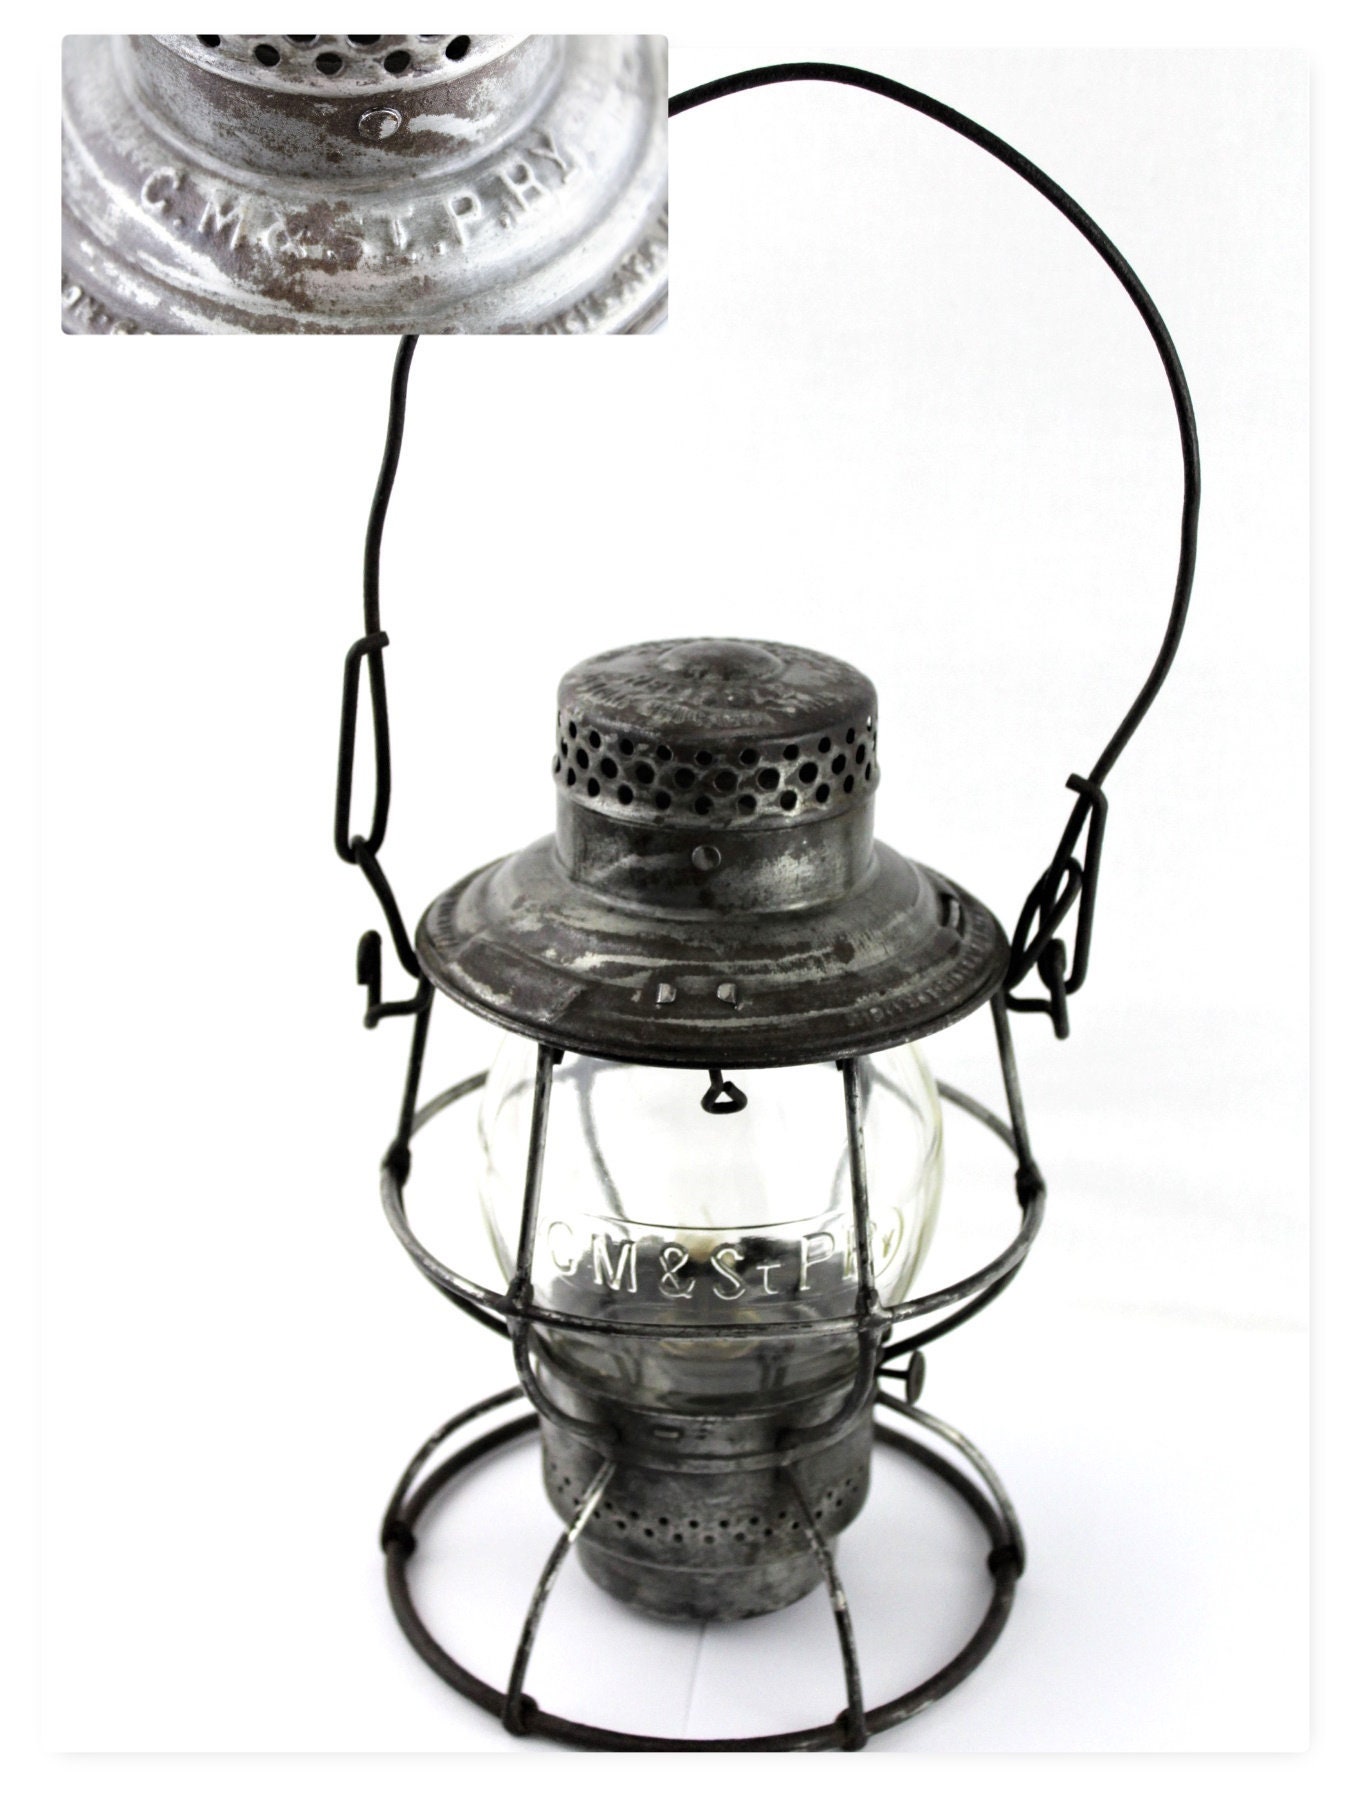 1914 Adlake Reliable Railroad Lantern, Tall Globe Lantern. Made for C. M. &  St. P. RY. Chicago, Milwaukee, St. Paul Railyard